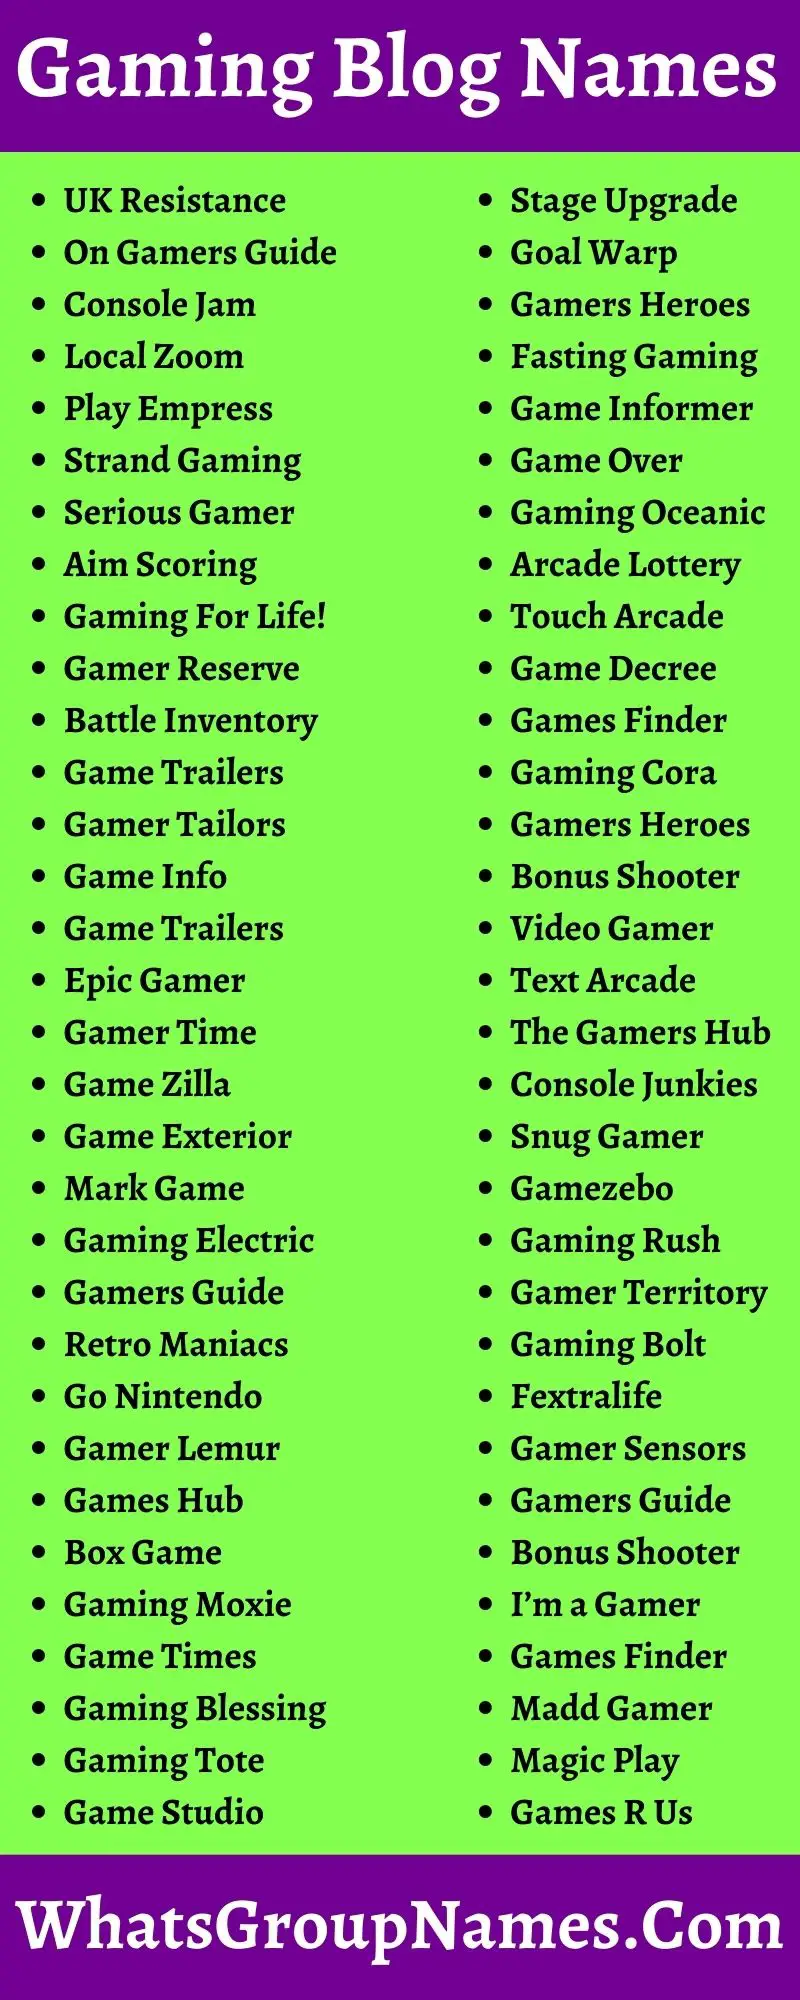 Gaming Blog Names